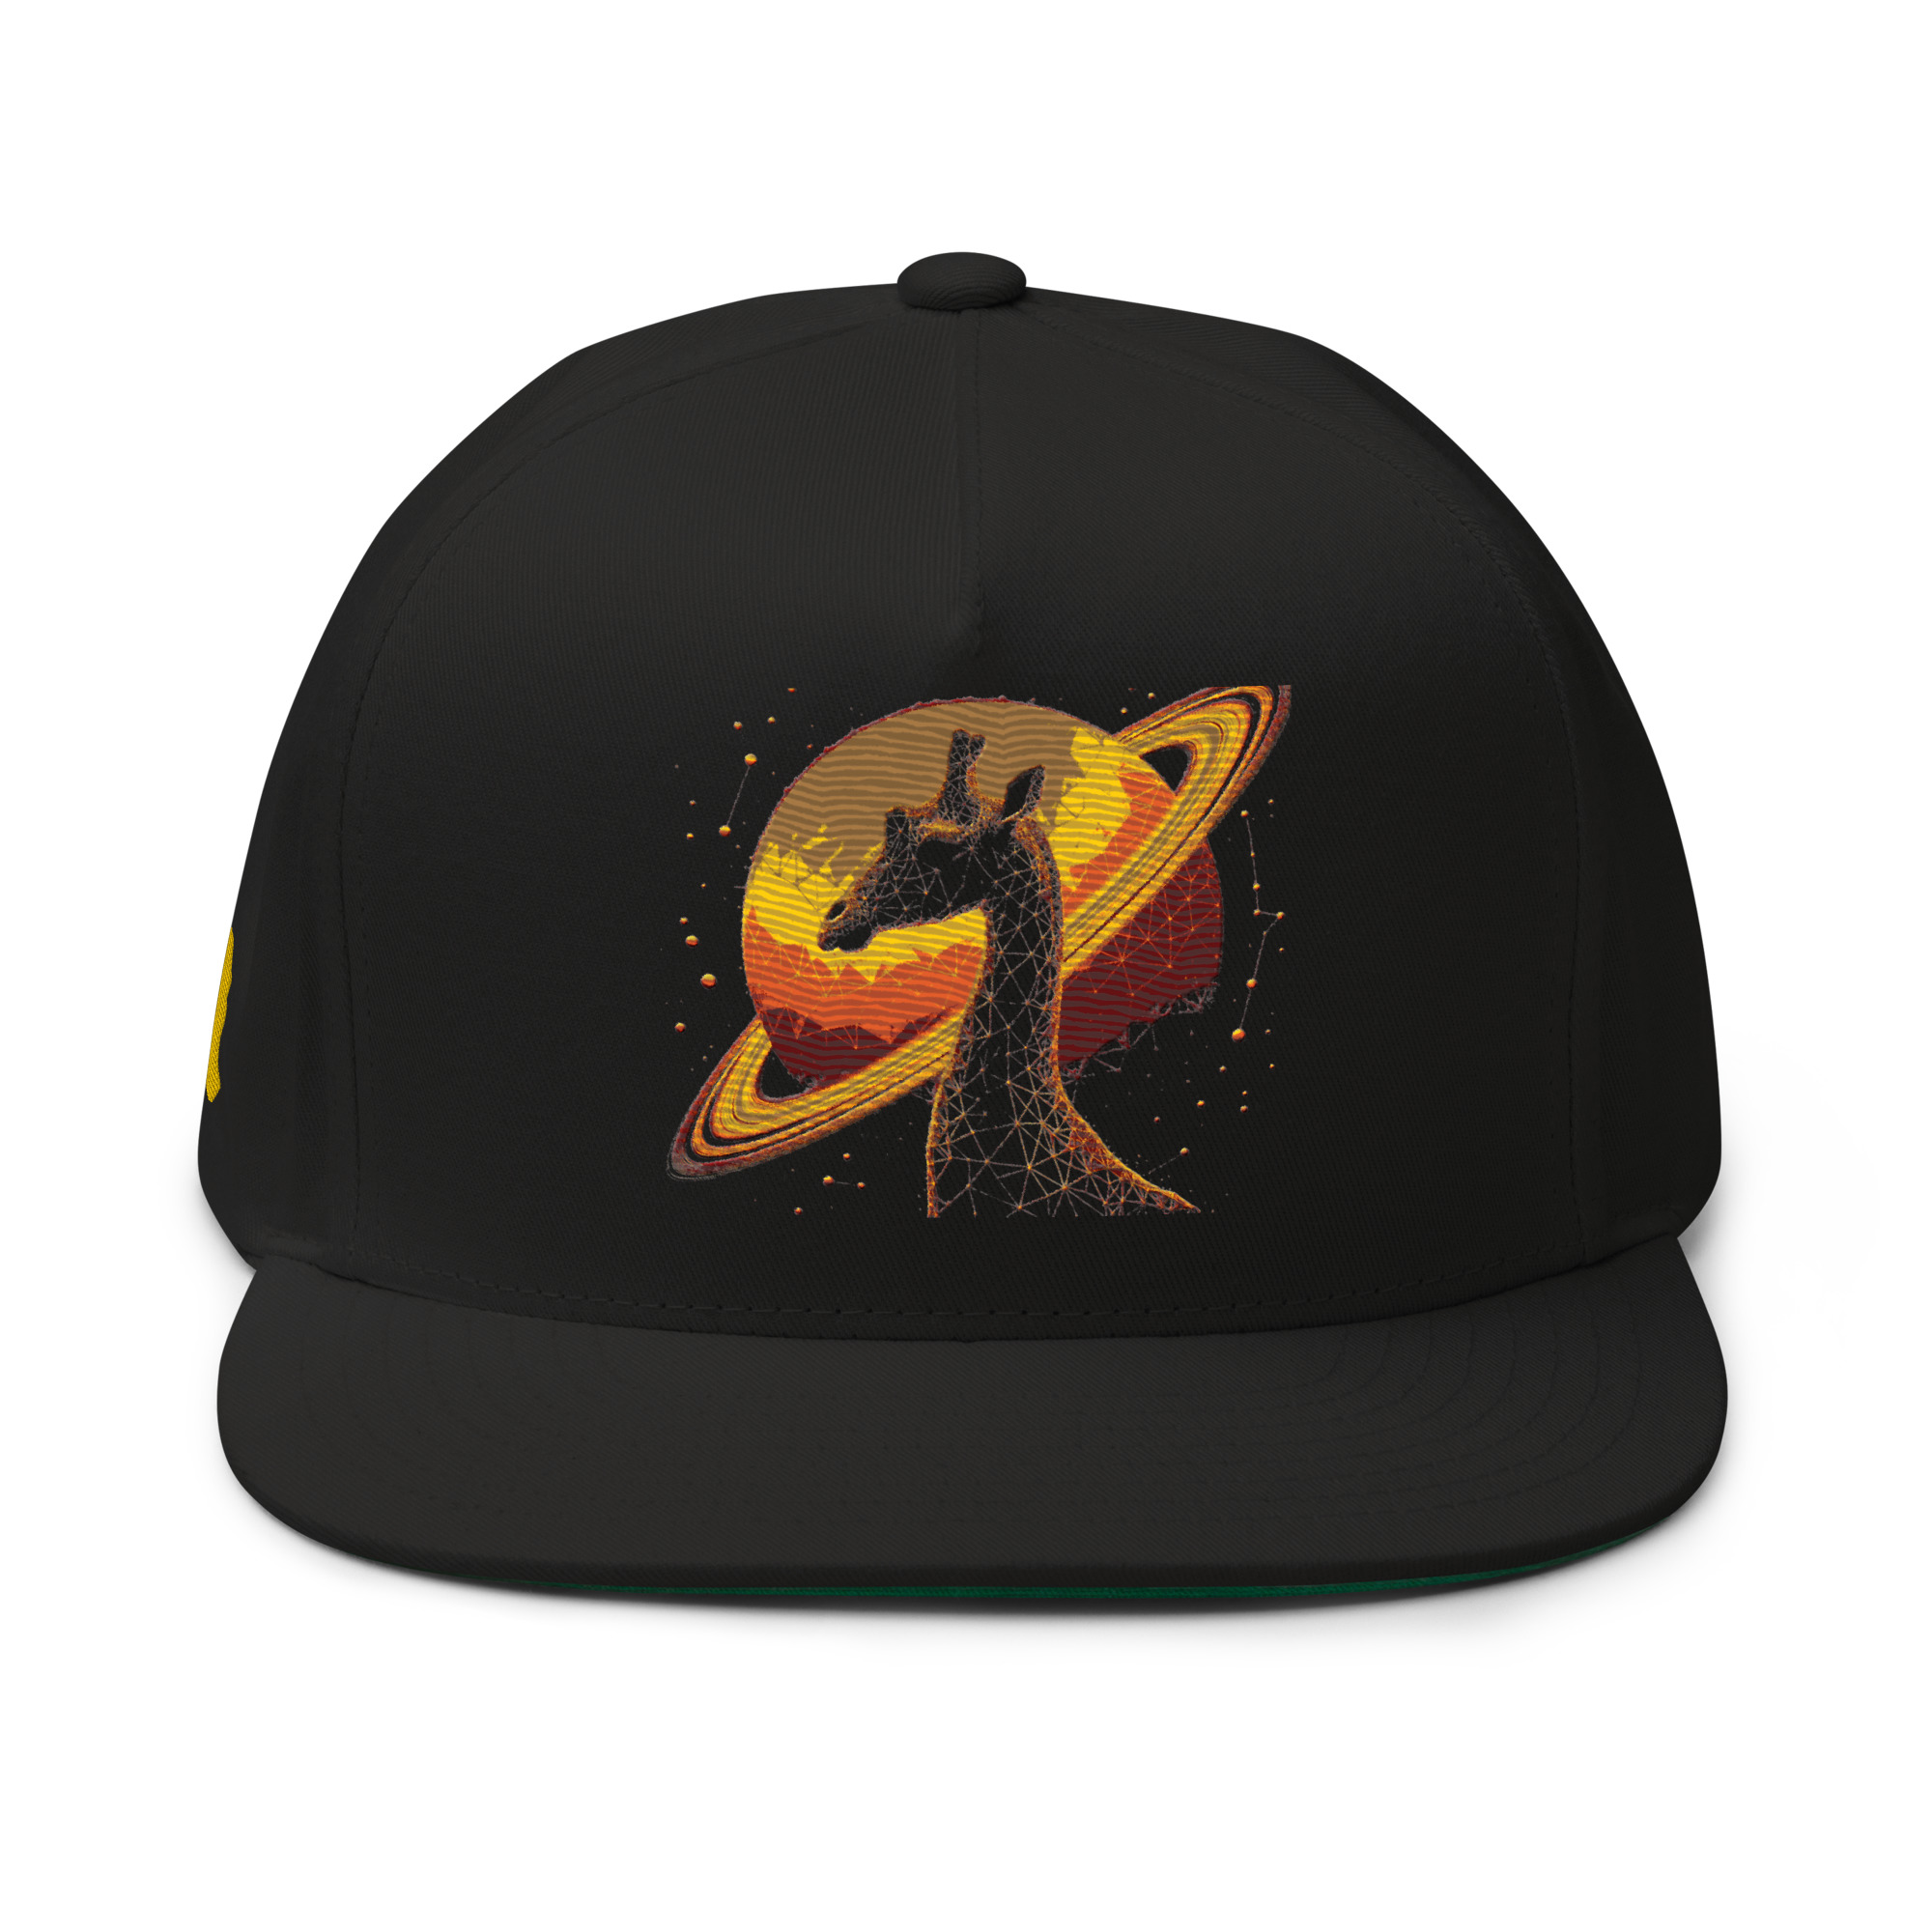 Space Giraffe SnapBack hat